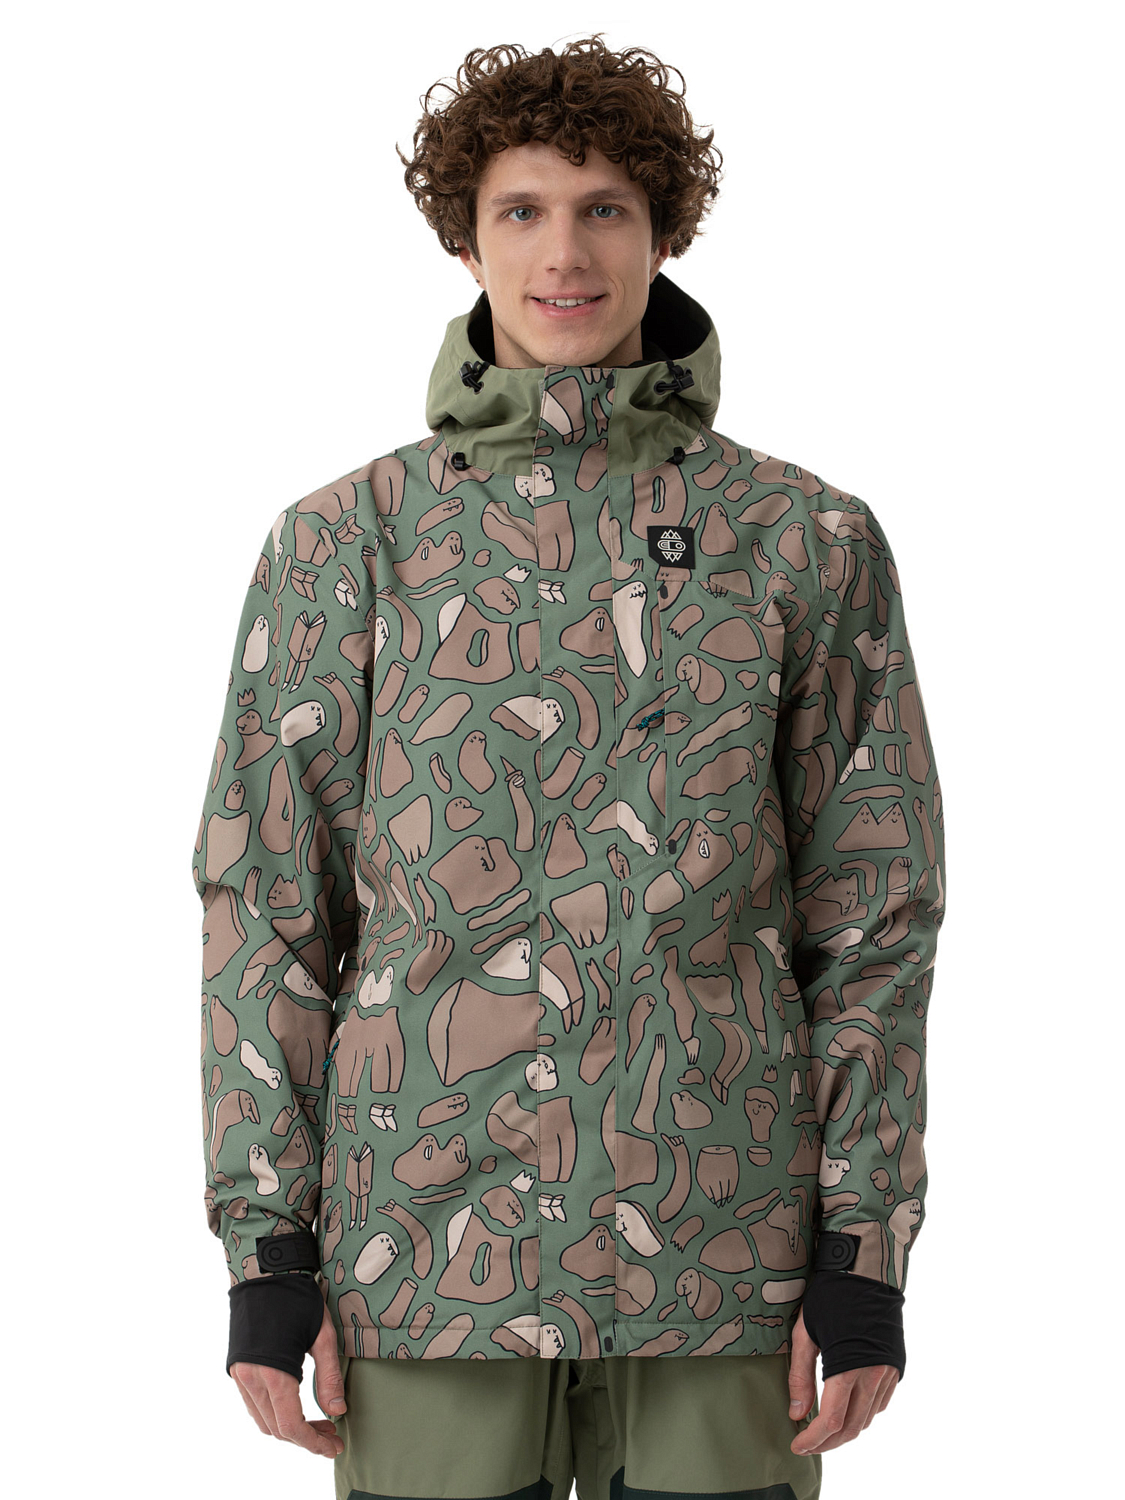 Куртка сноубордическая AIRBLASTER Beast 2L Bc Green Critterflage